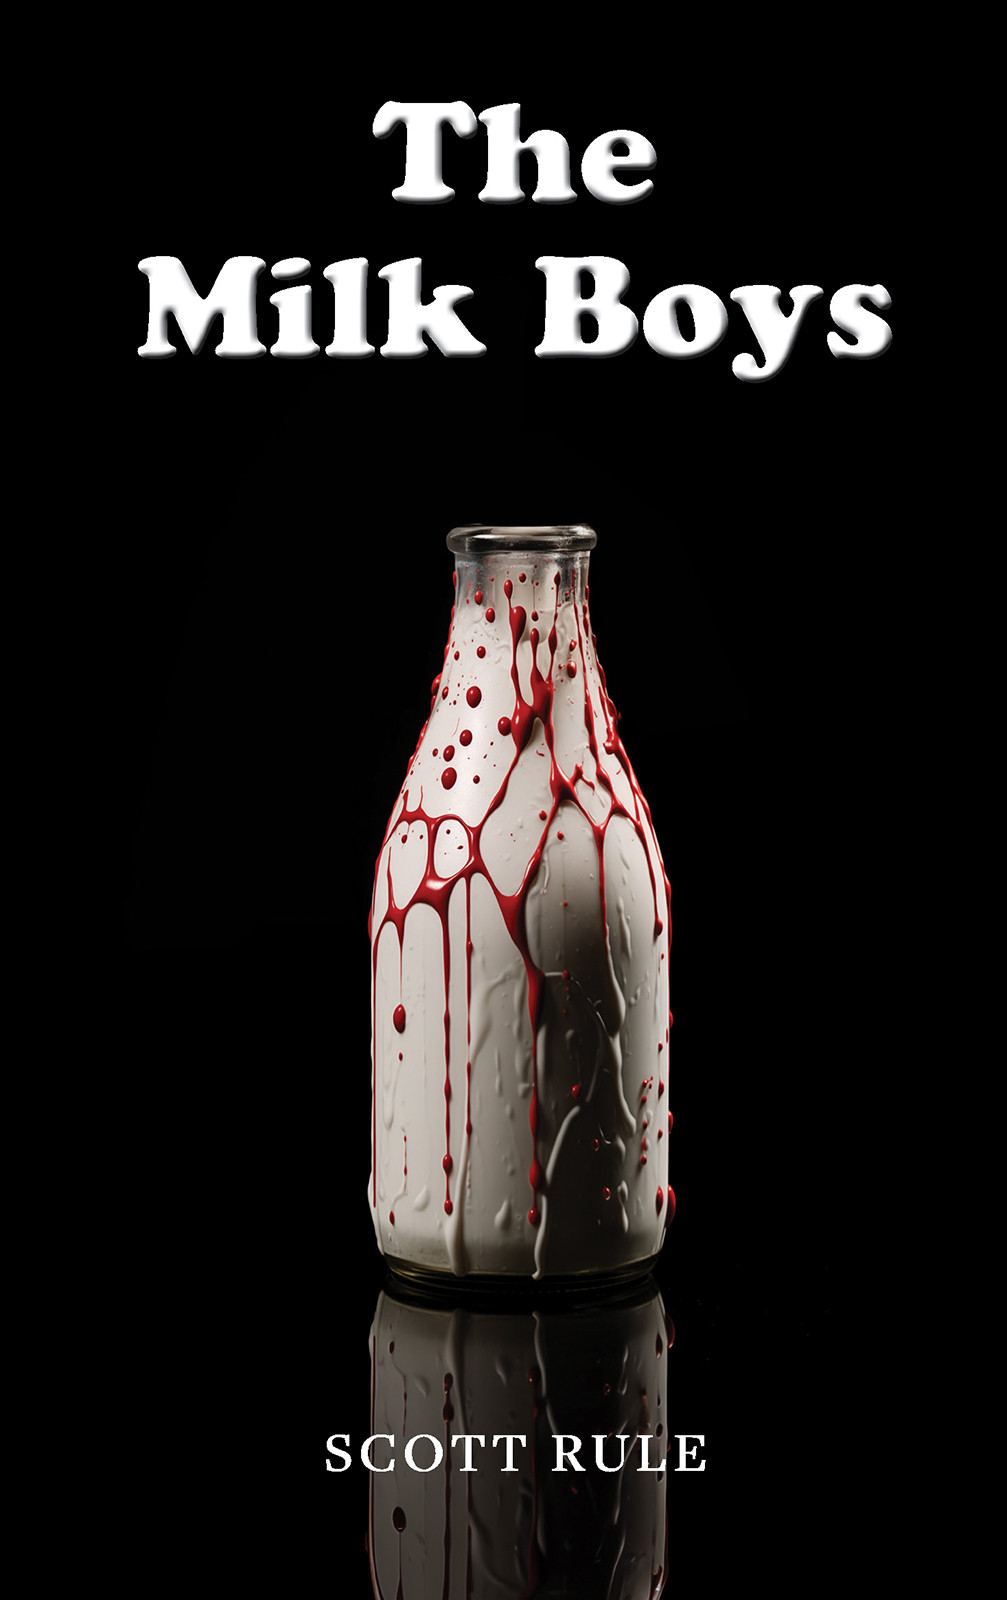 The Milk Boys